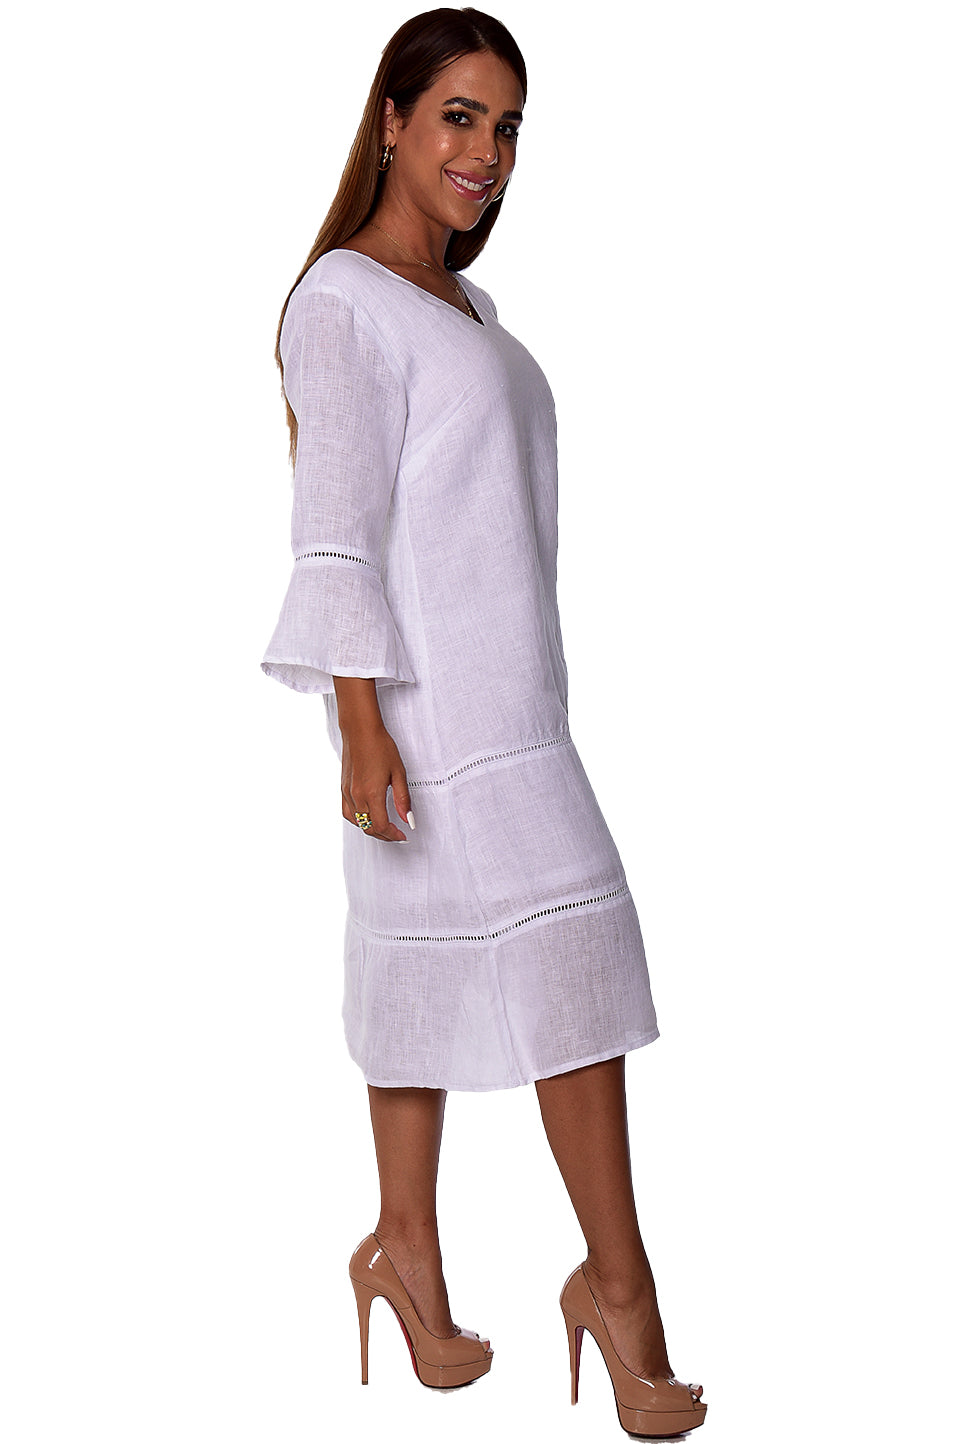 Azucar Ladies 3/4 Sleeves & Ruffled Hem Long Dress - LLWD2082